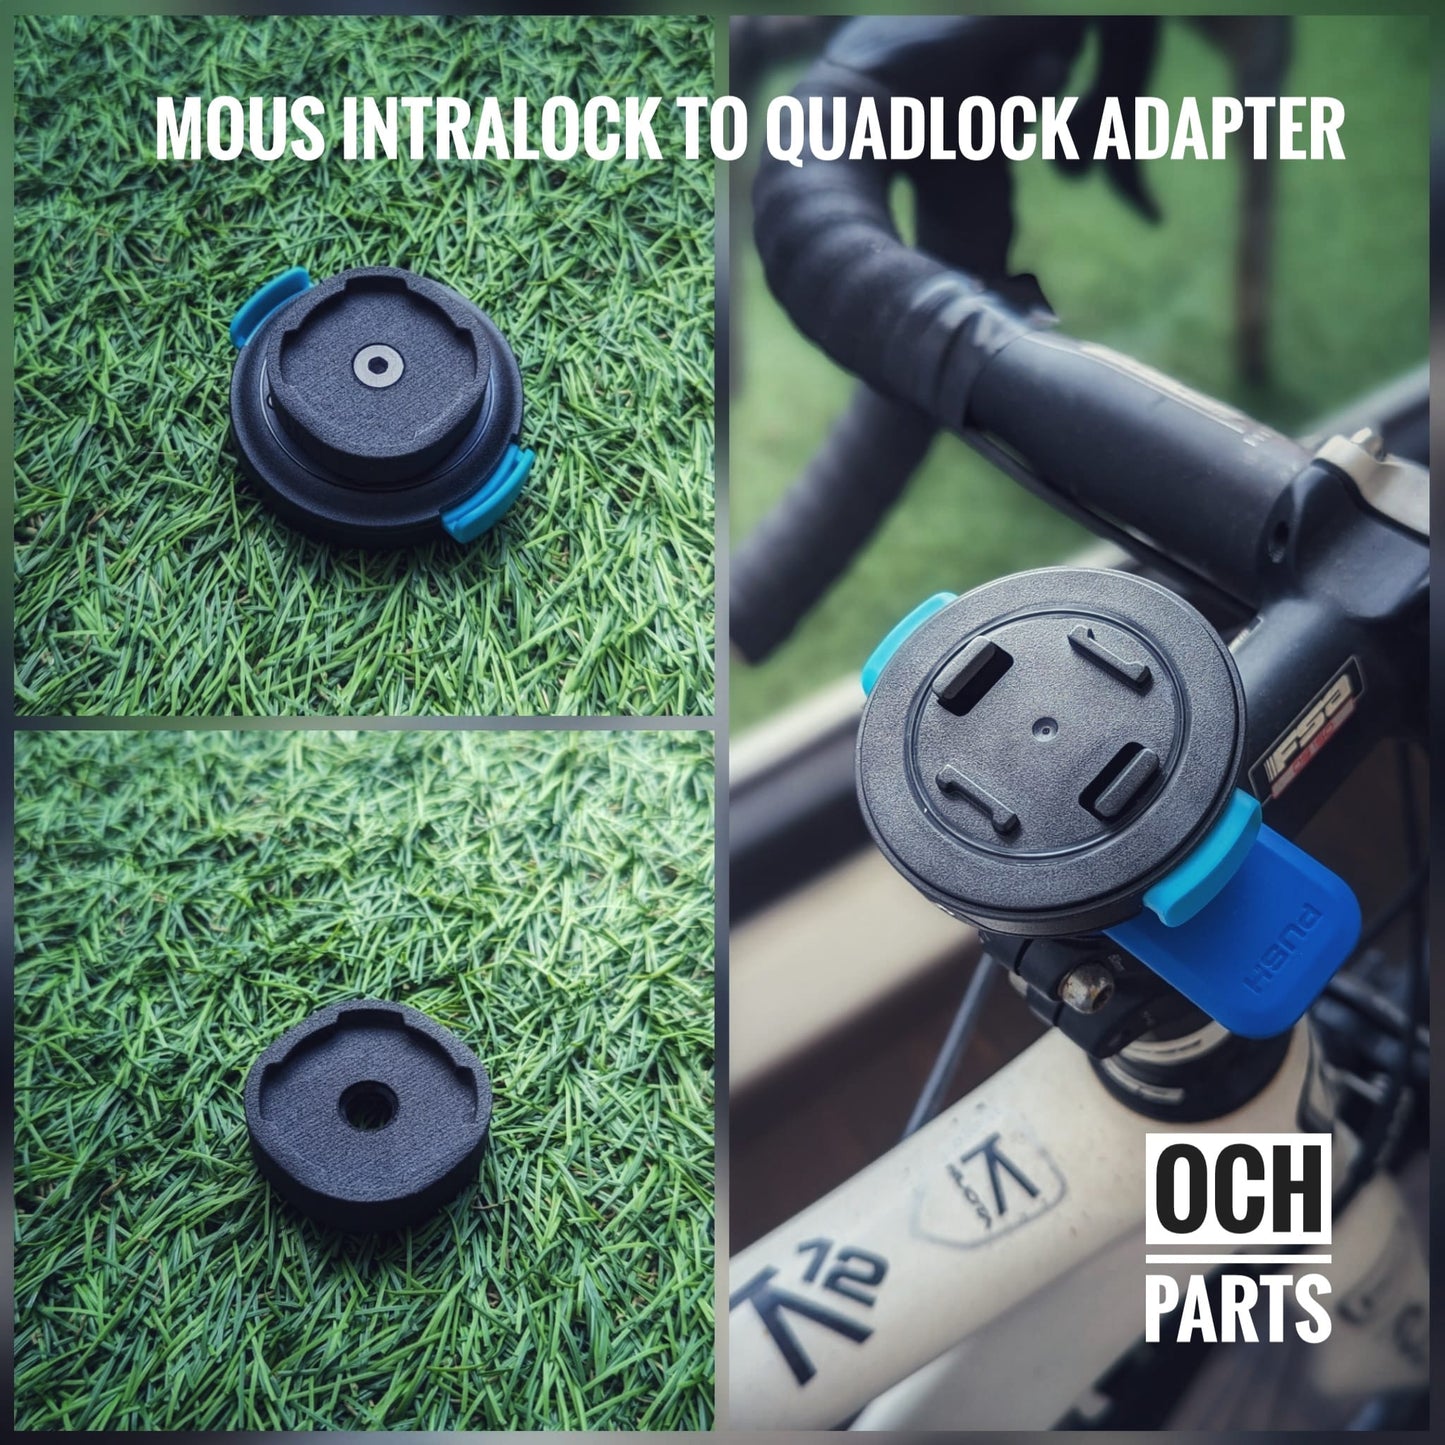 Mous Intralock to Quadlock Adapter